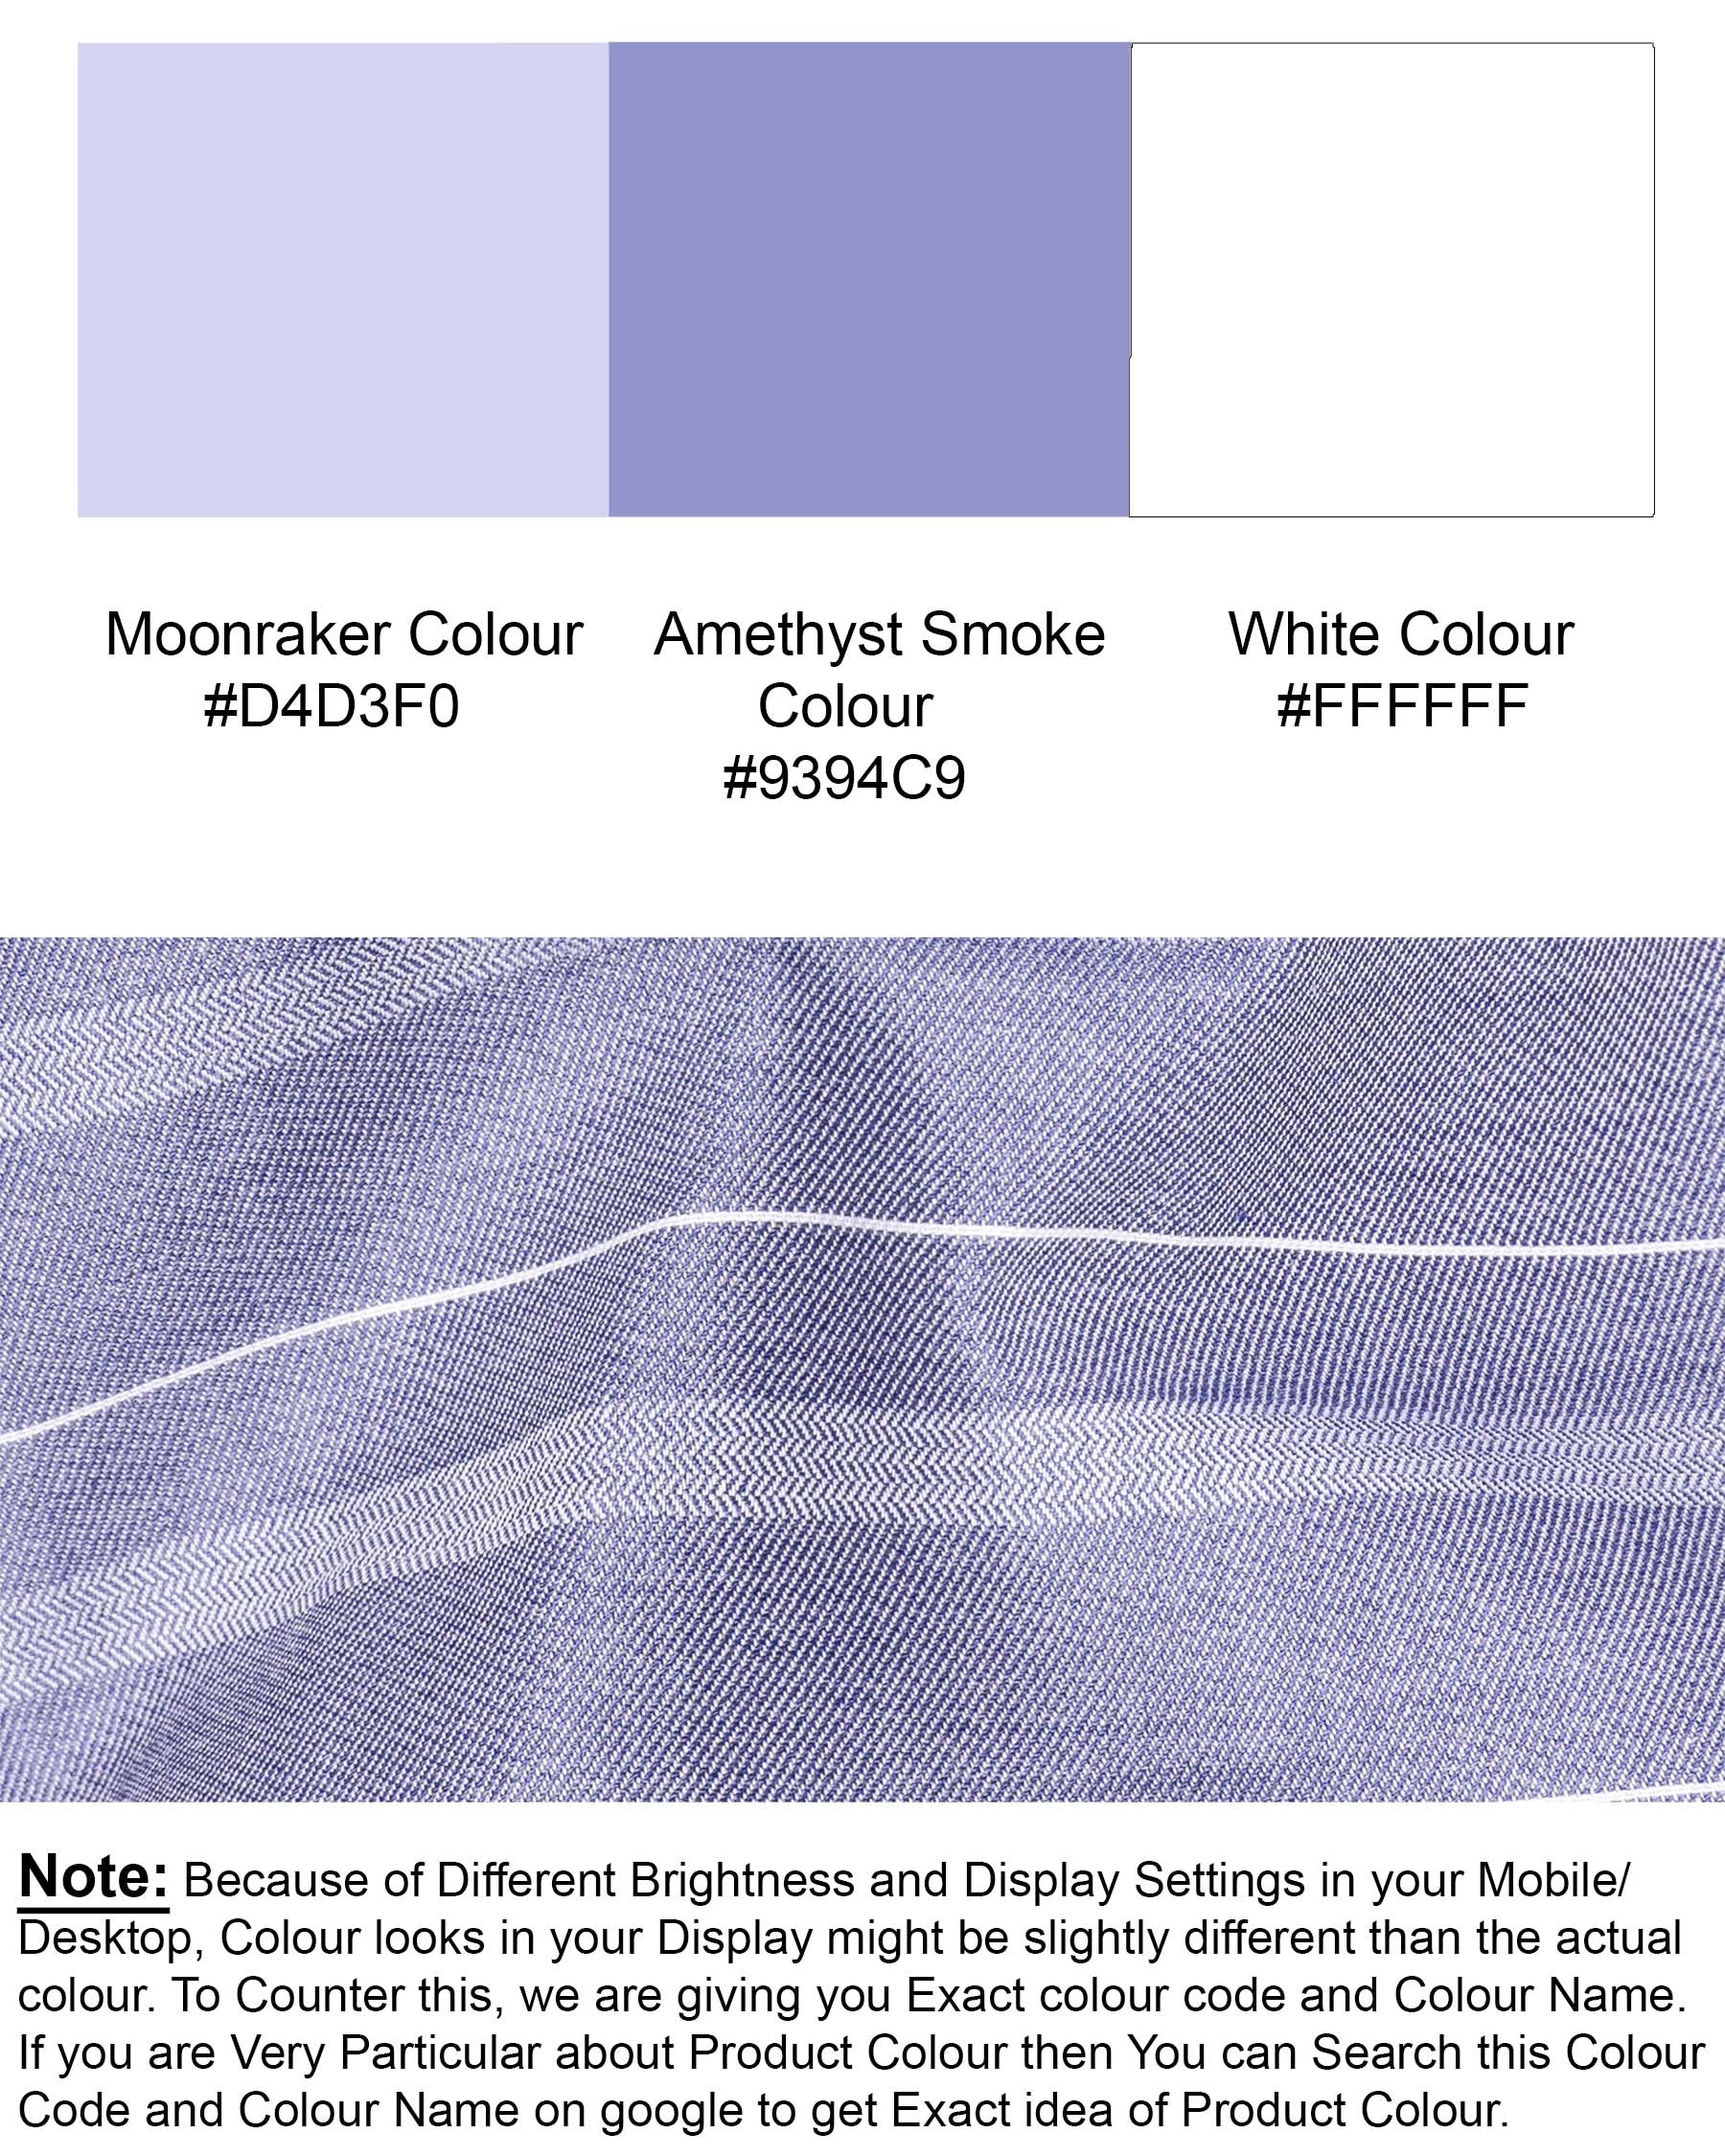 Amethyst Smoke Striped Dobby Textured Premium Giza Cotton Shirt 6659-CA-38,6659-CA-H-38,6659-CA-39,6659-CA-H-39,6659-CA-40,6659-CA-H-40,6659-CA-42,6659-CA-H-42,6659-CA-